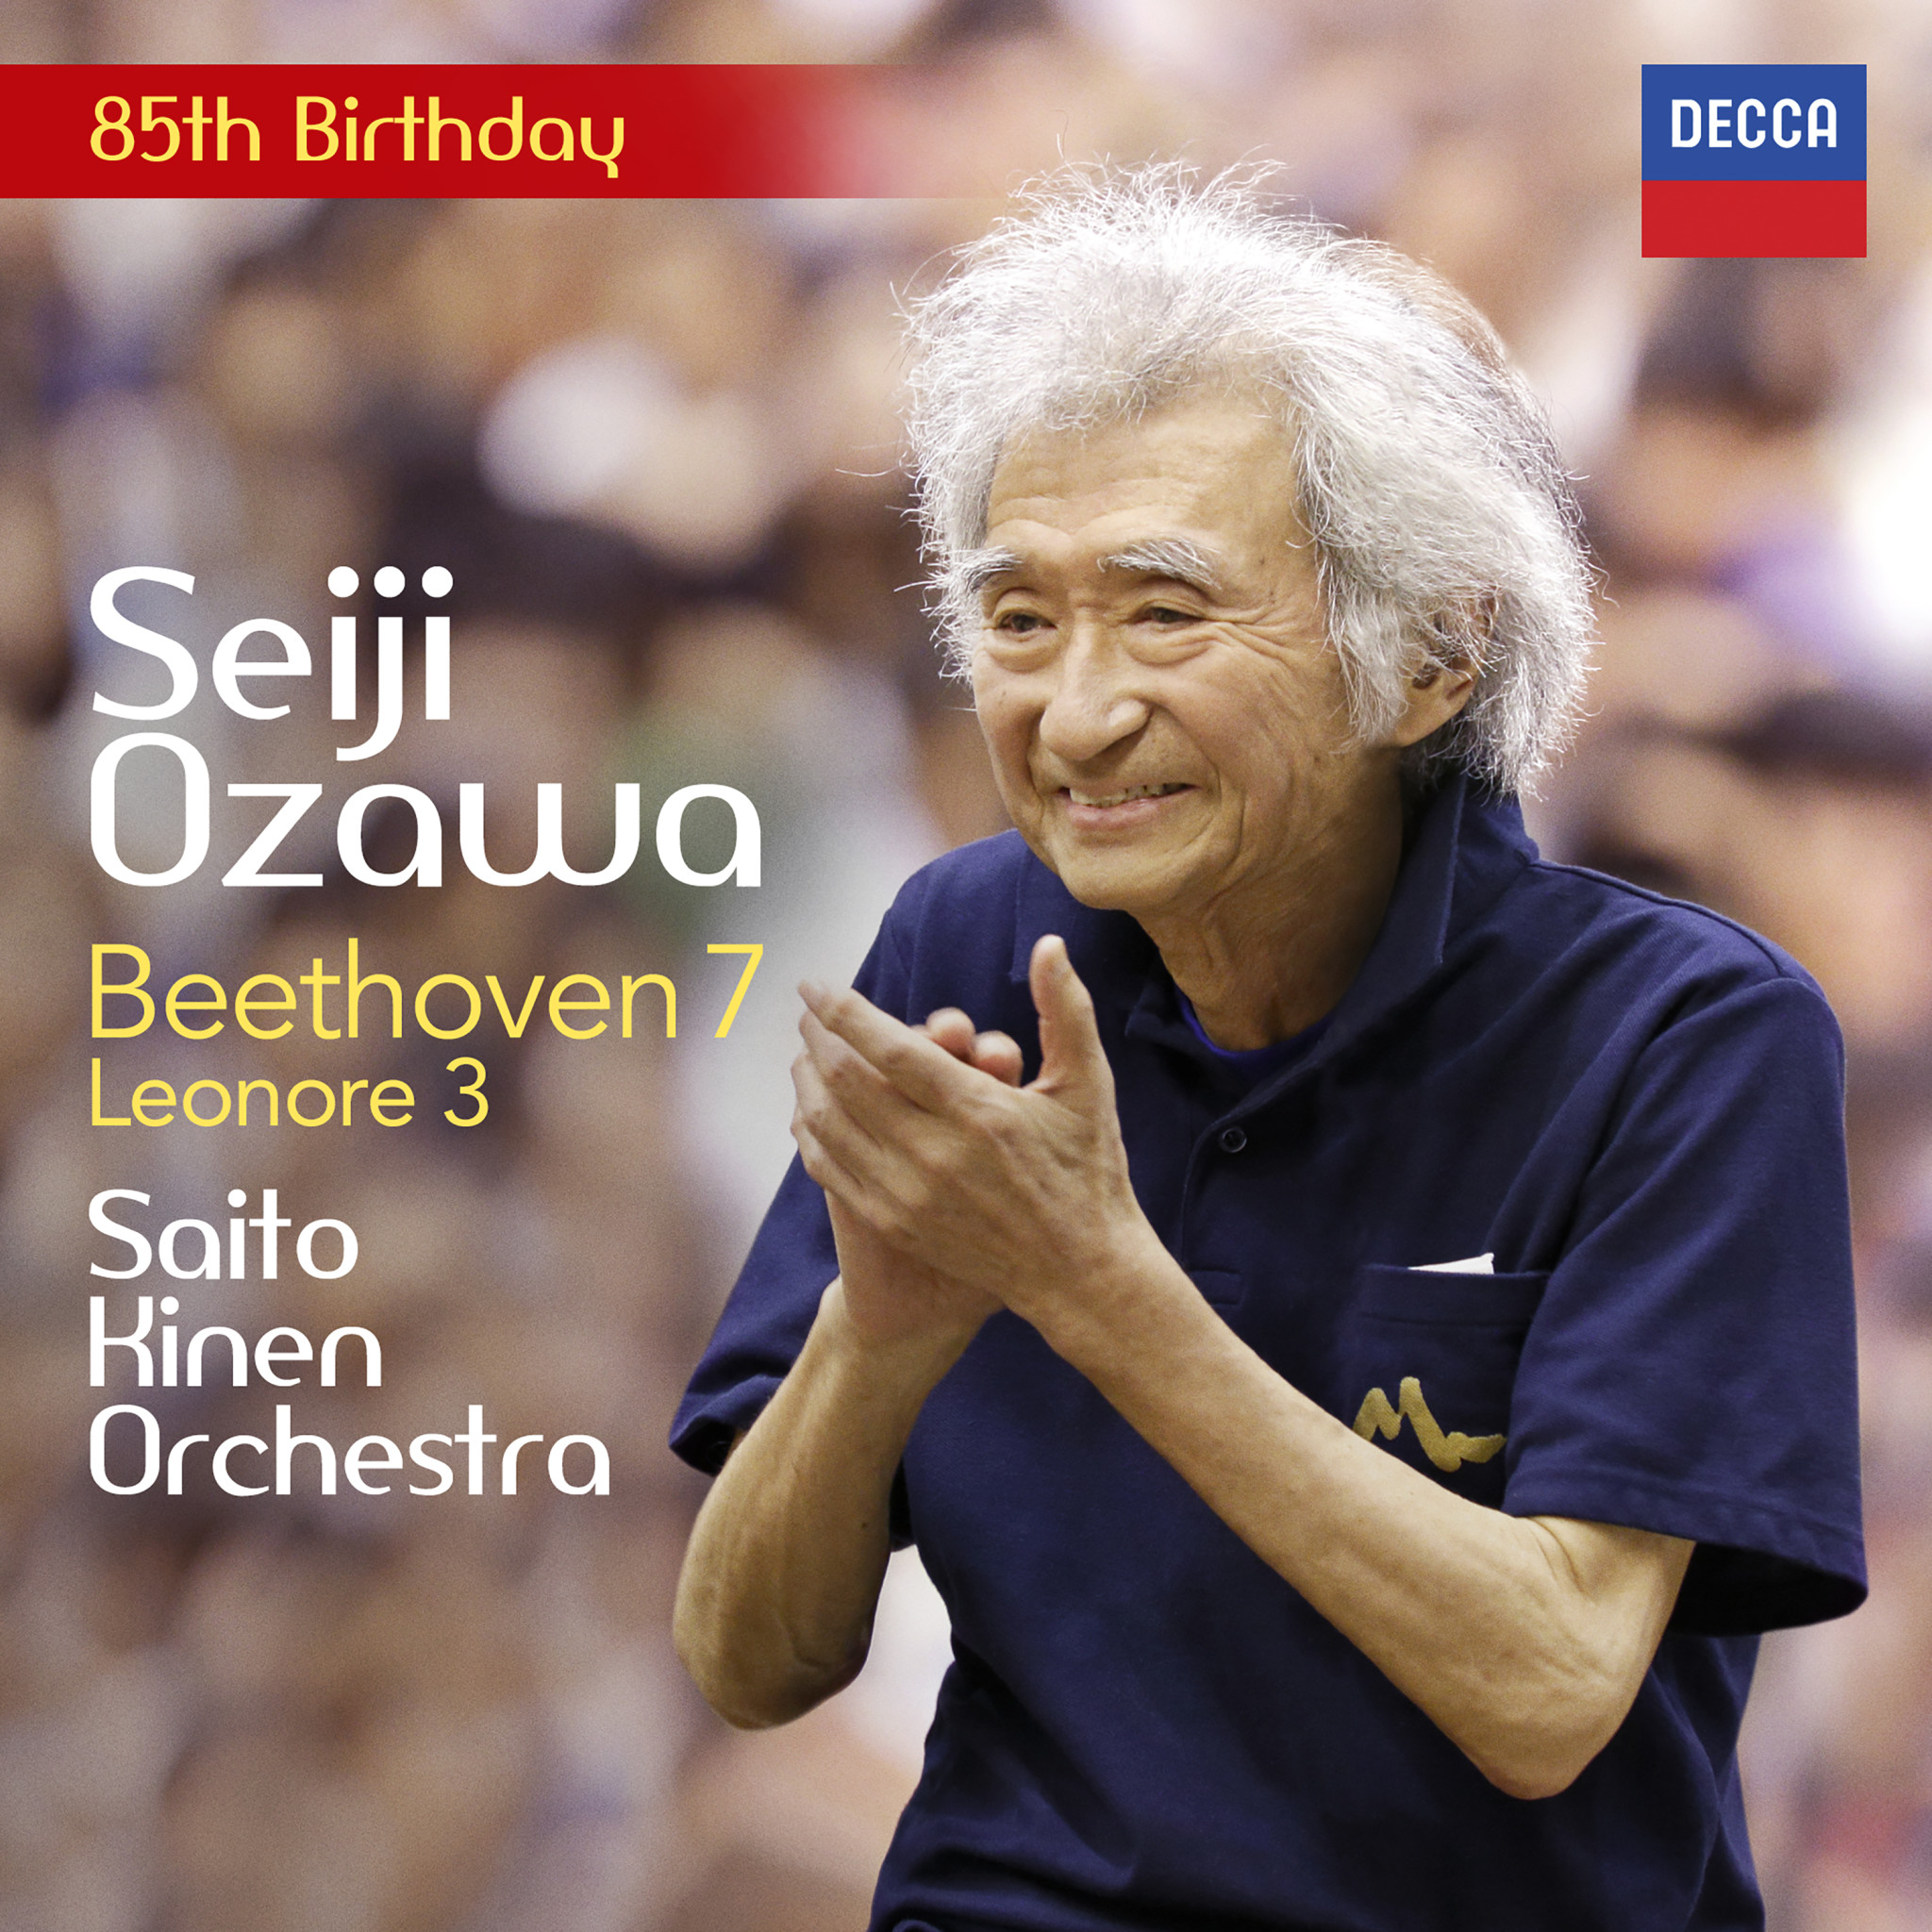 Seiji Ozawa Beethoven 7 Birthday CVR